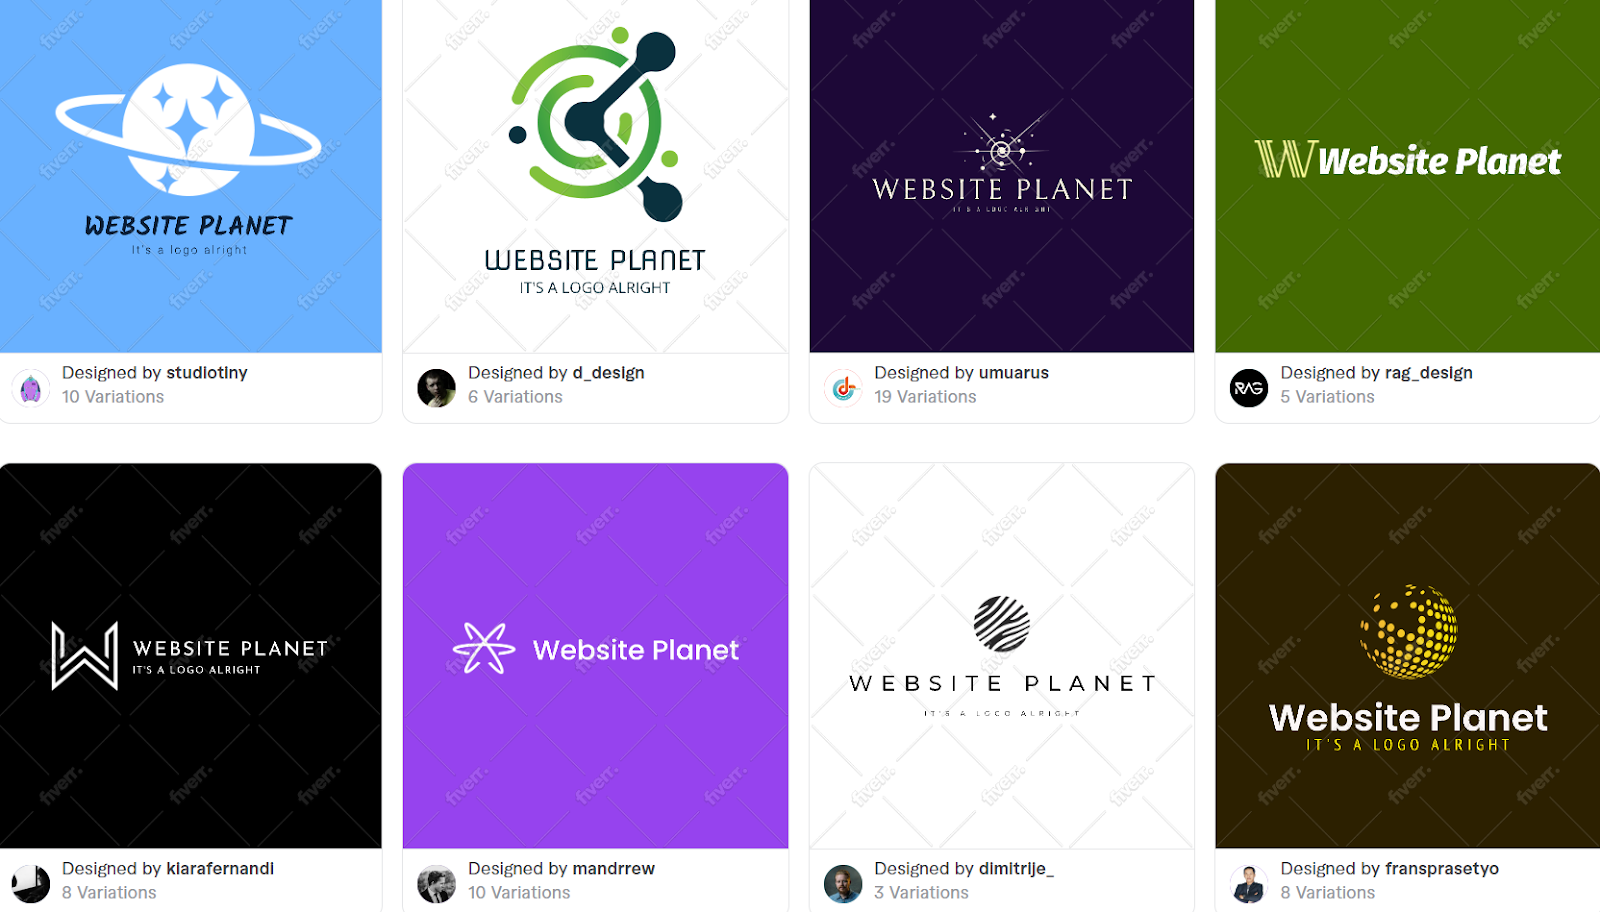 Fiverr Logo Maker Website Planet generated logos